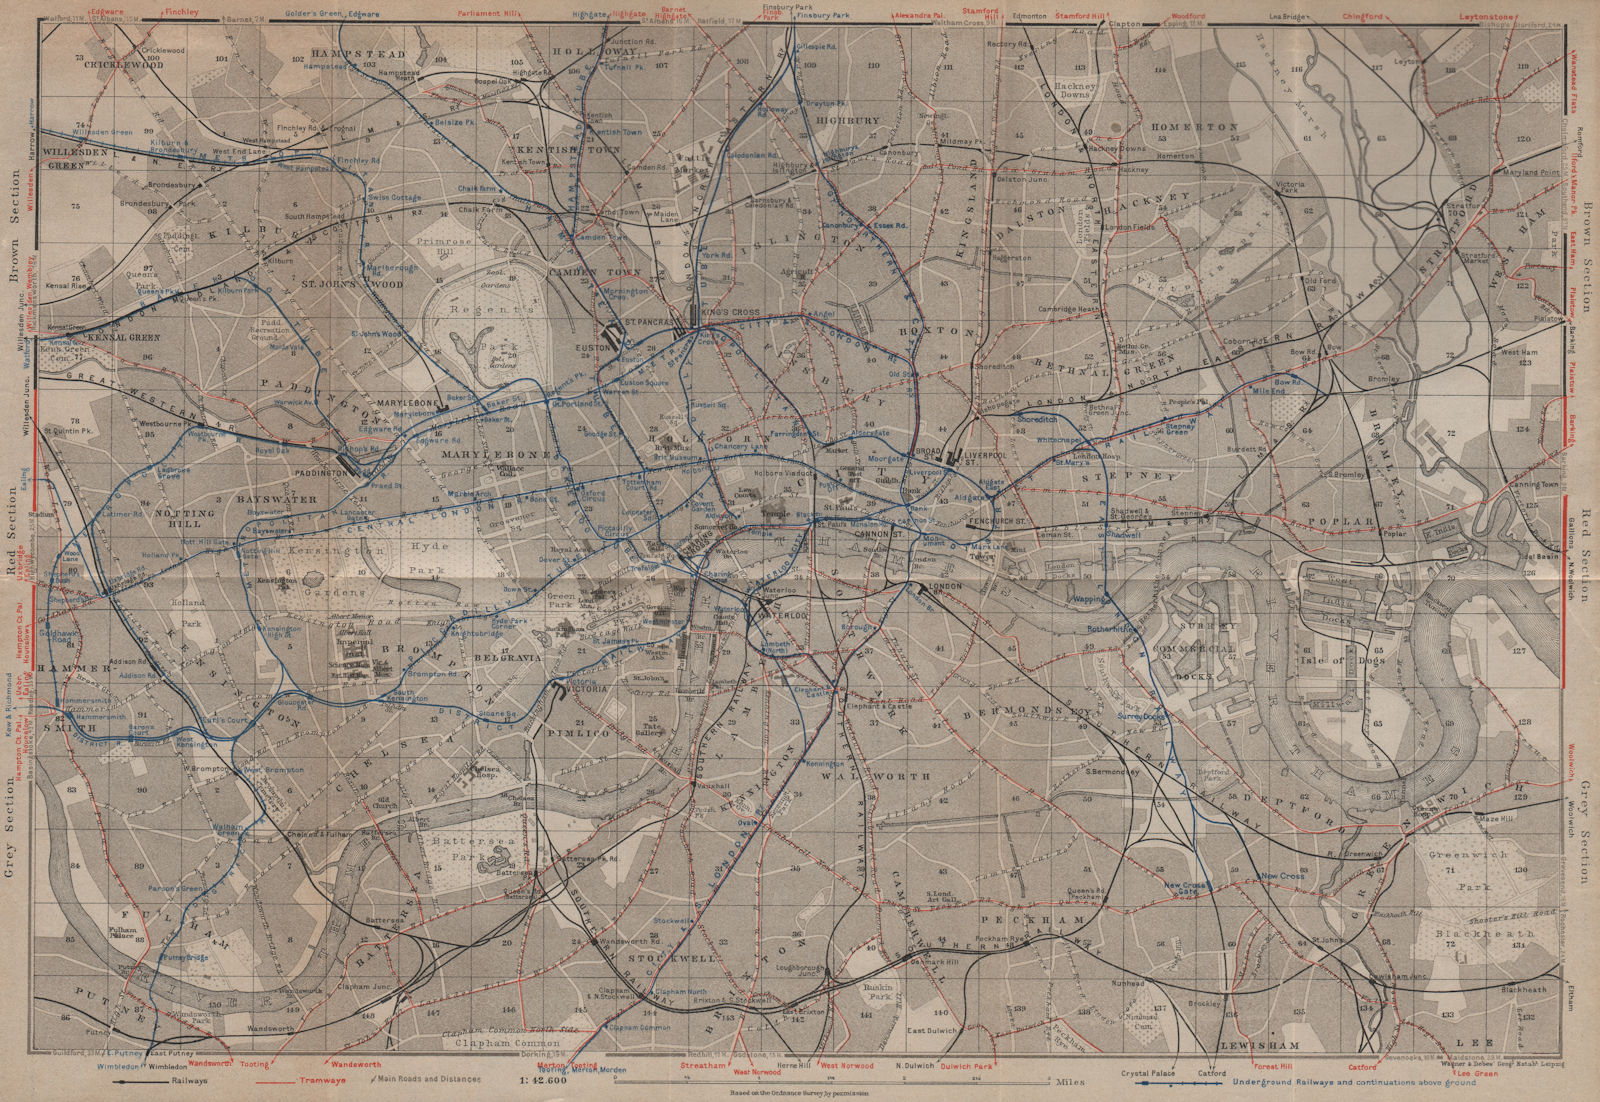 CENTRAL LONDON TRANSPORT. Railways tramways underground tube lines 1930 map